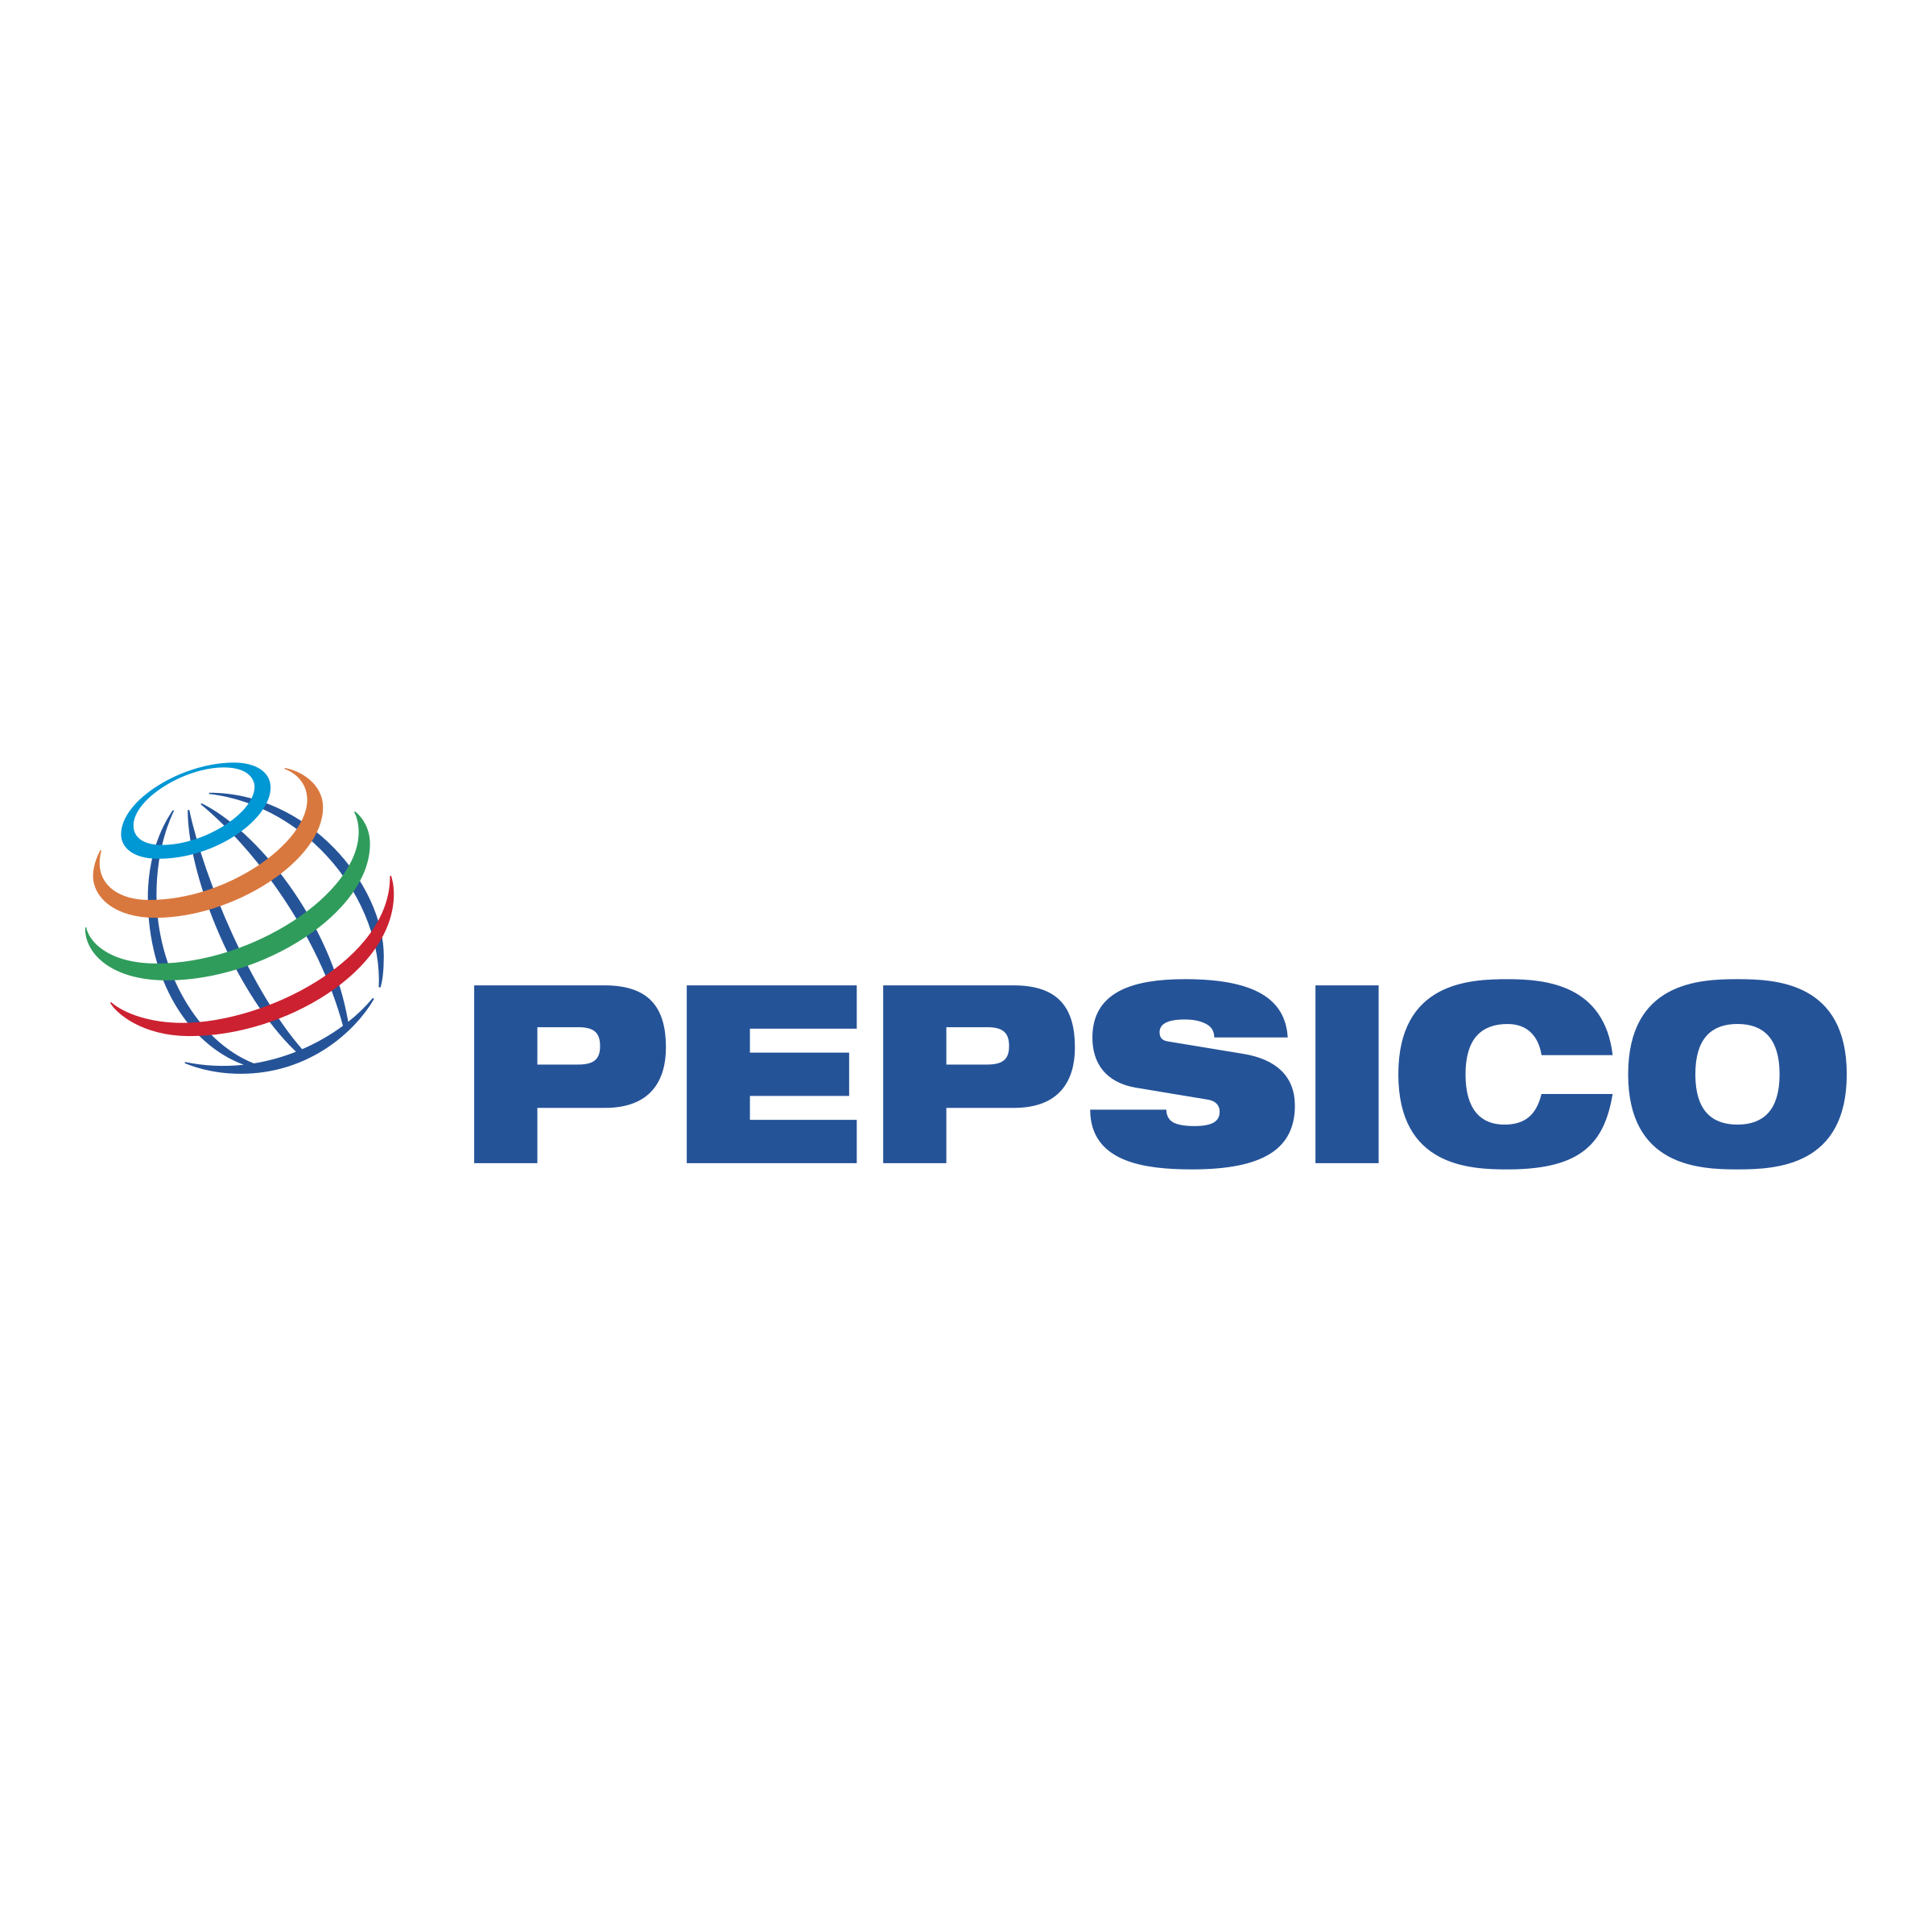 pepsico-logo-png-transparent